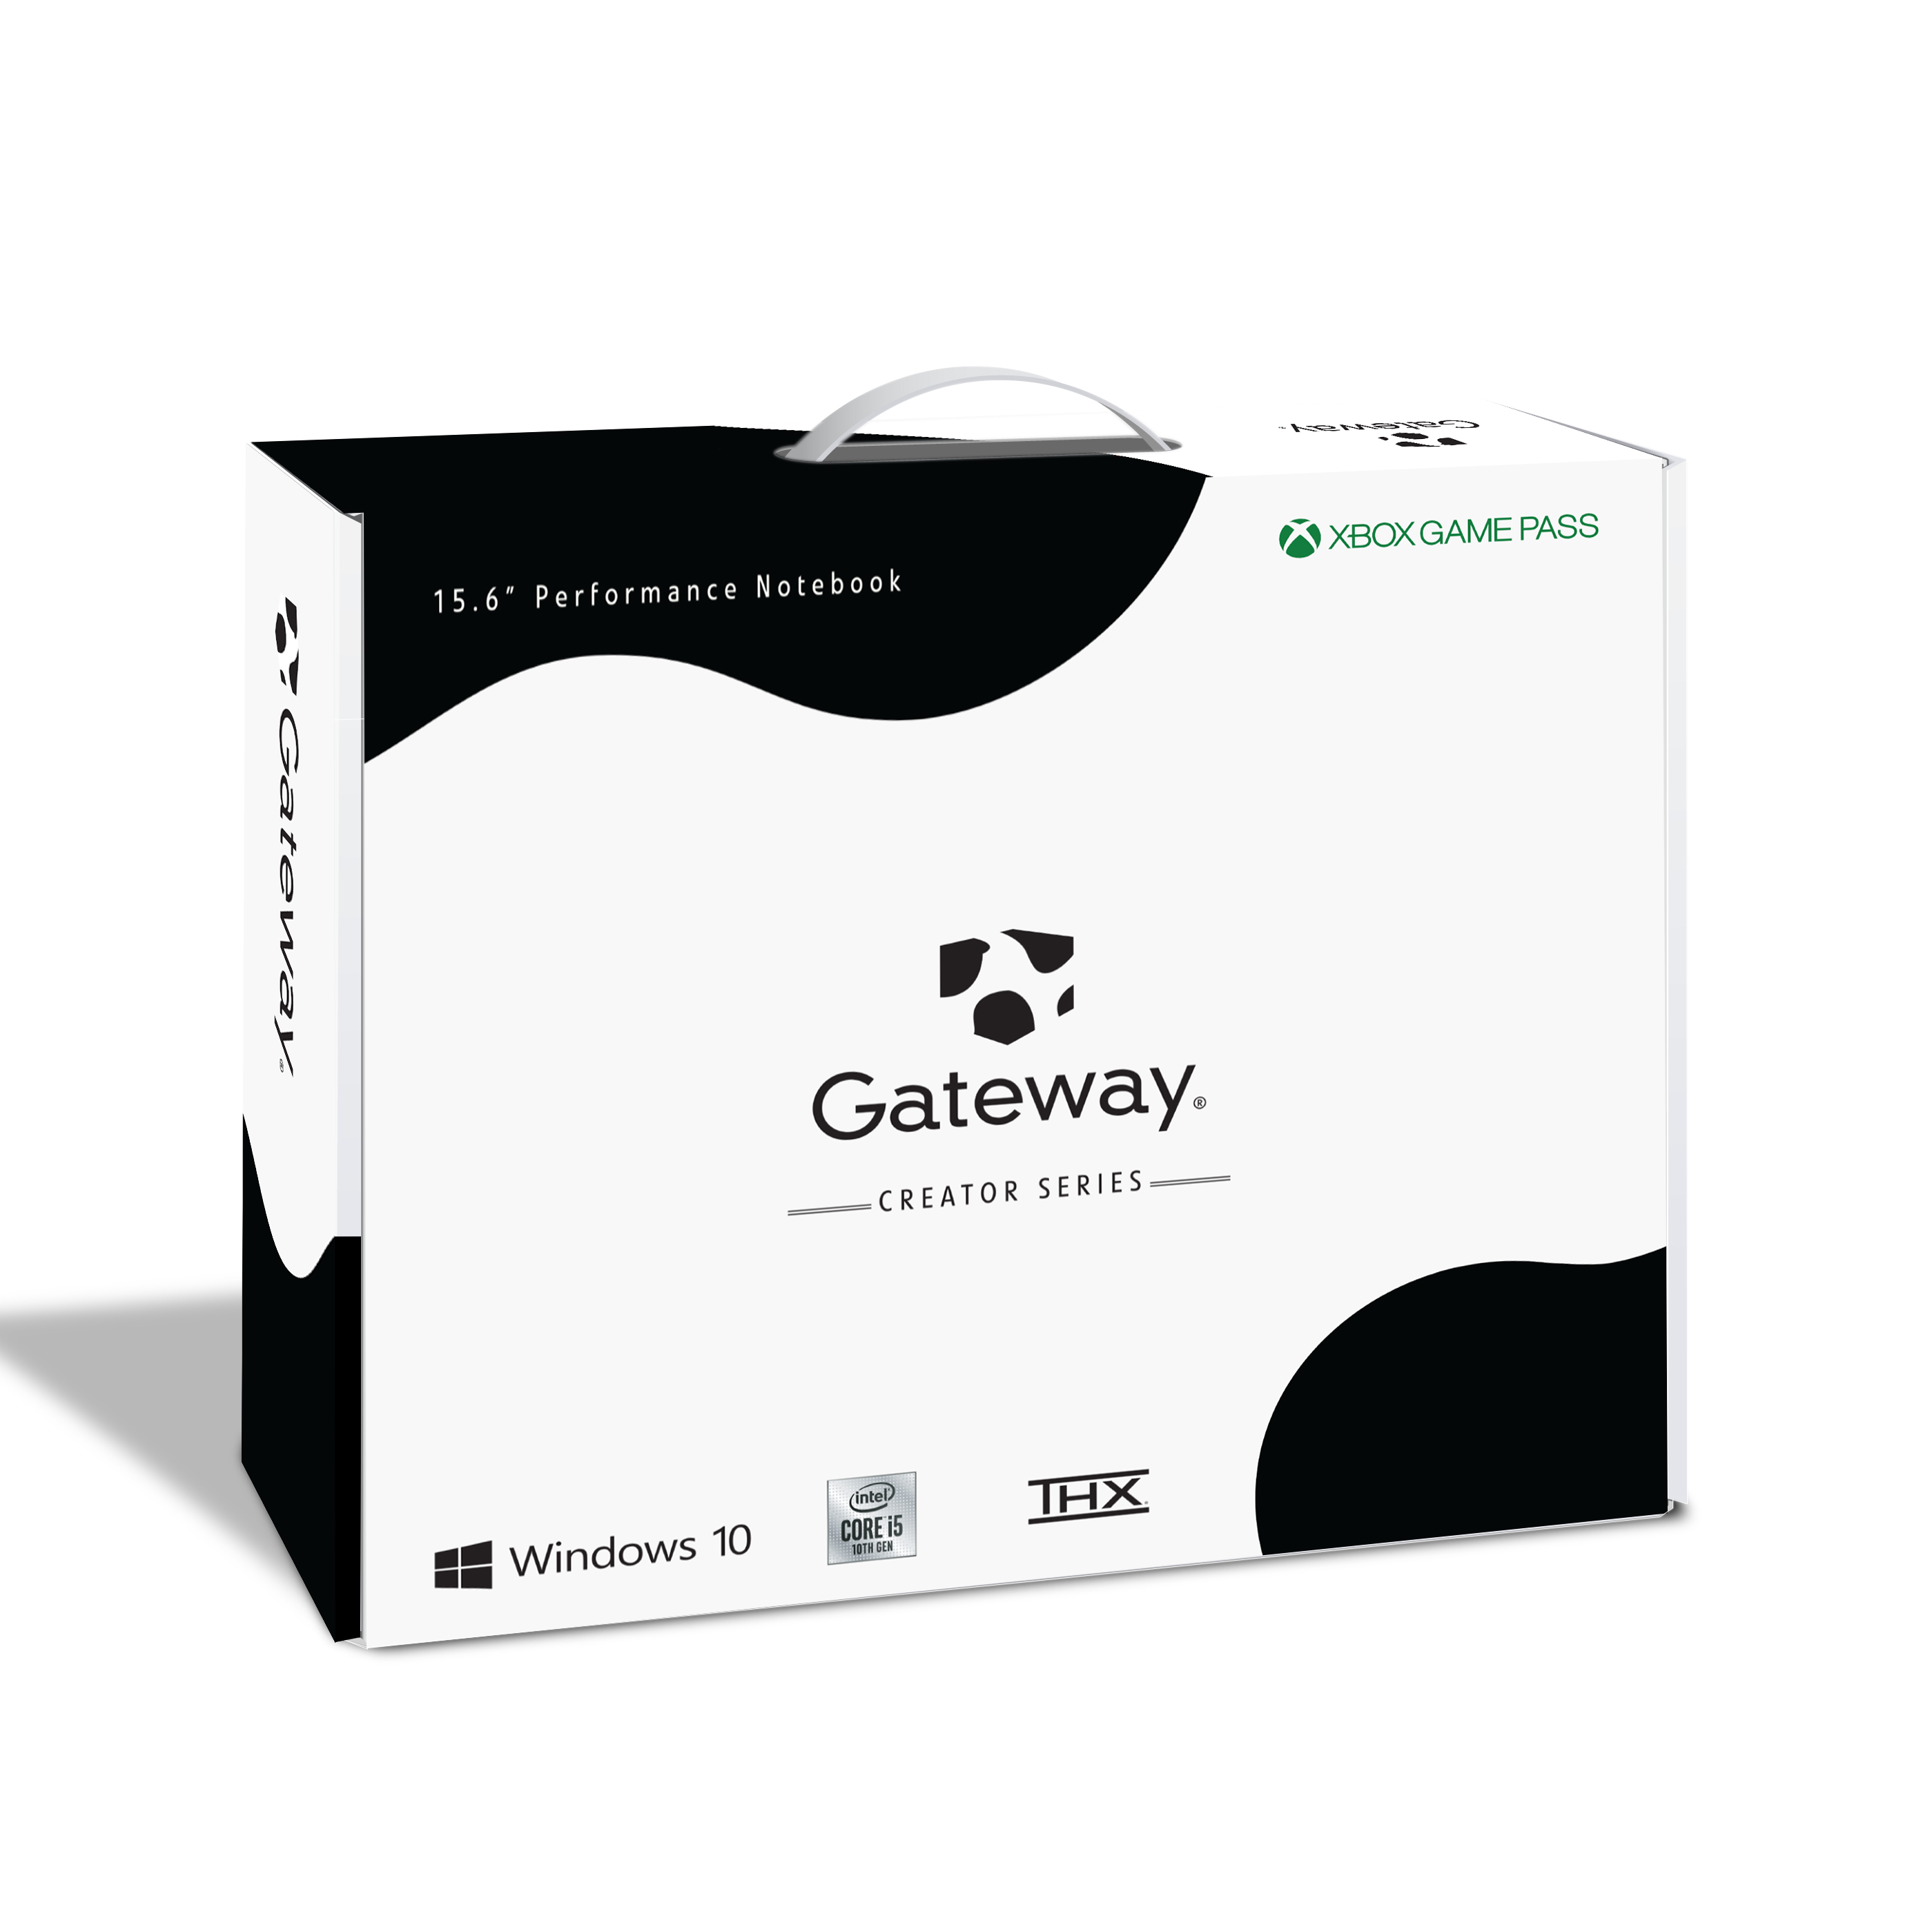 Gateway Creator Series 15.6" FHD Performance Notebook, Intel i5-10300H, NVIDIA 2060 RTX, 8GB RAM, 256GB SSD, Xbox Game Pass for PC, HD Webcam, Cortana, Windows 10 Home - image 10 of 13